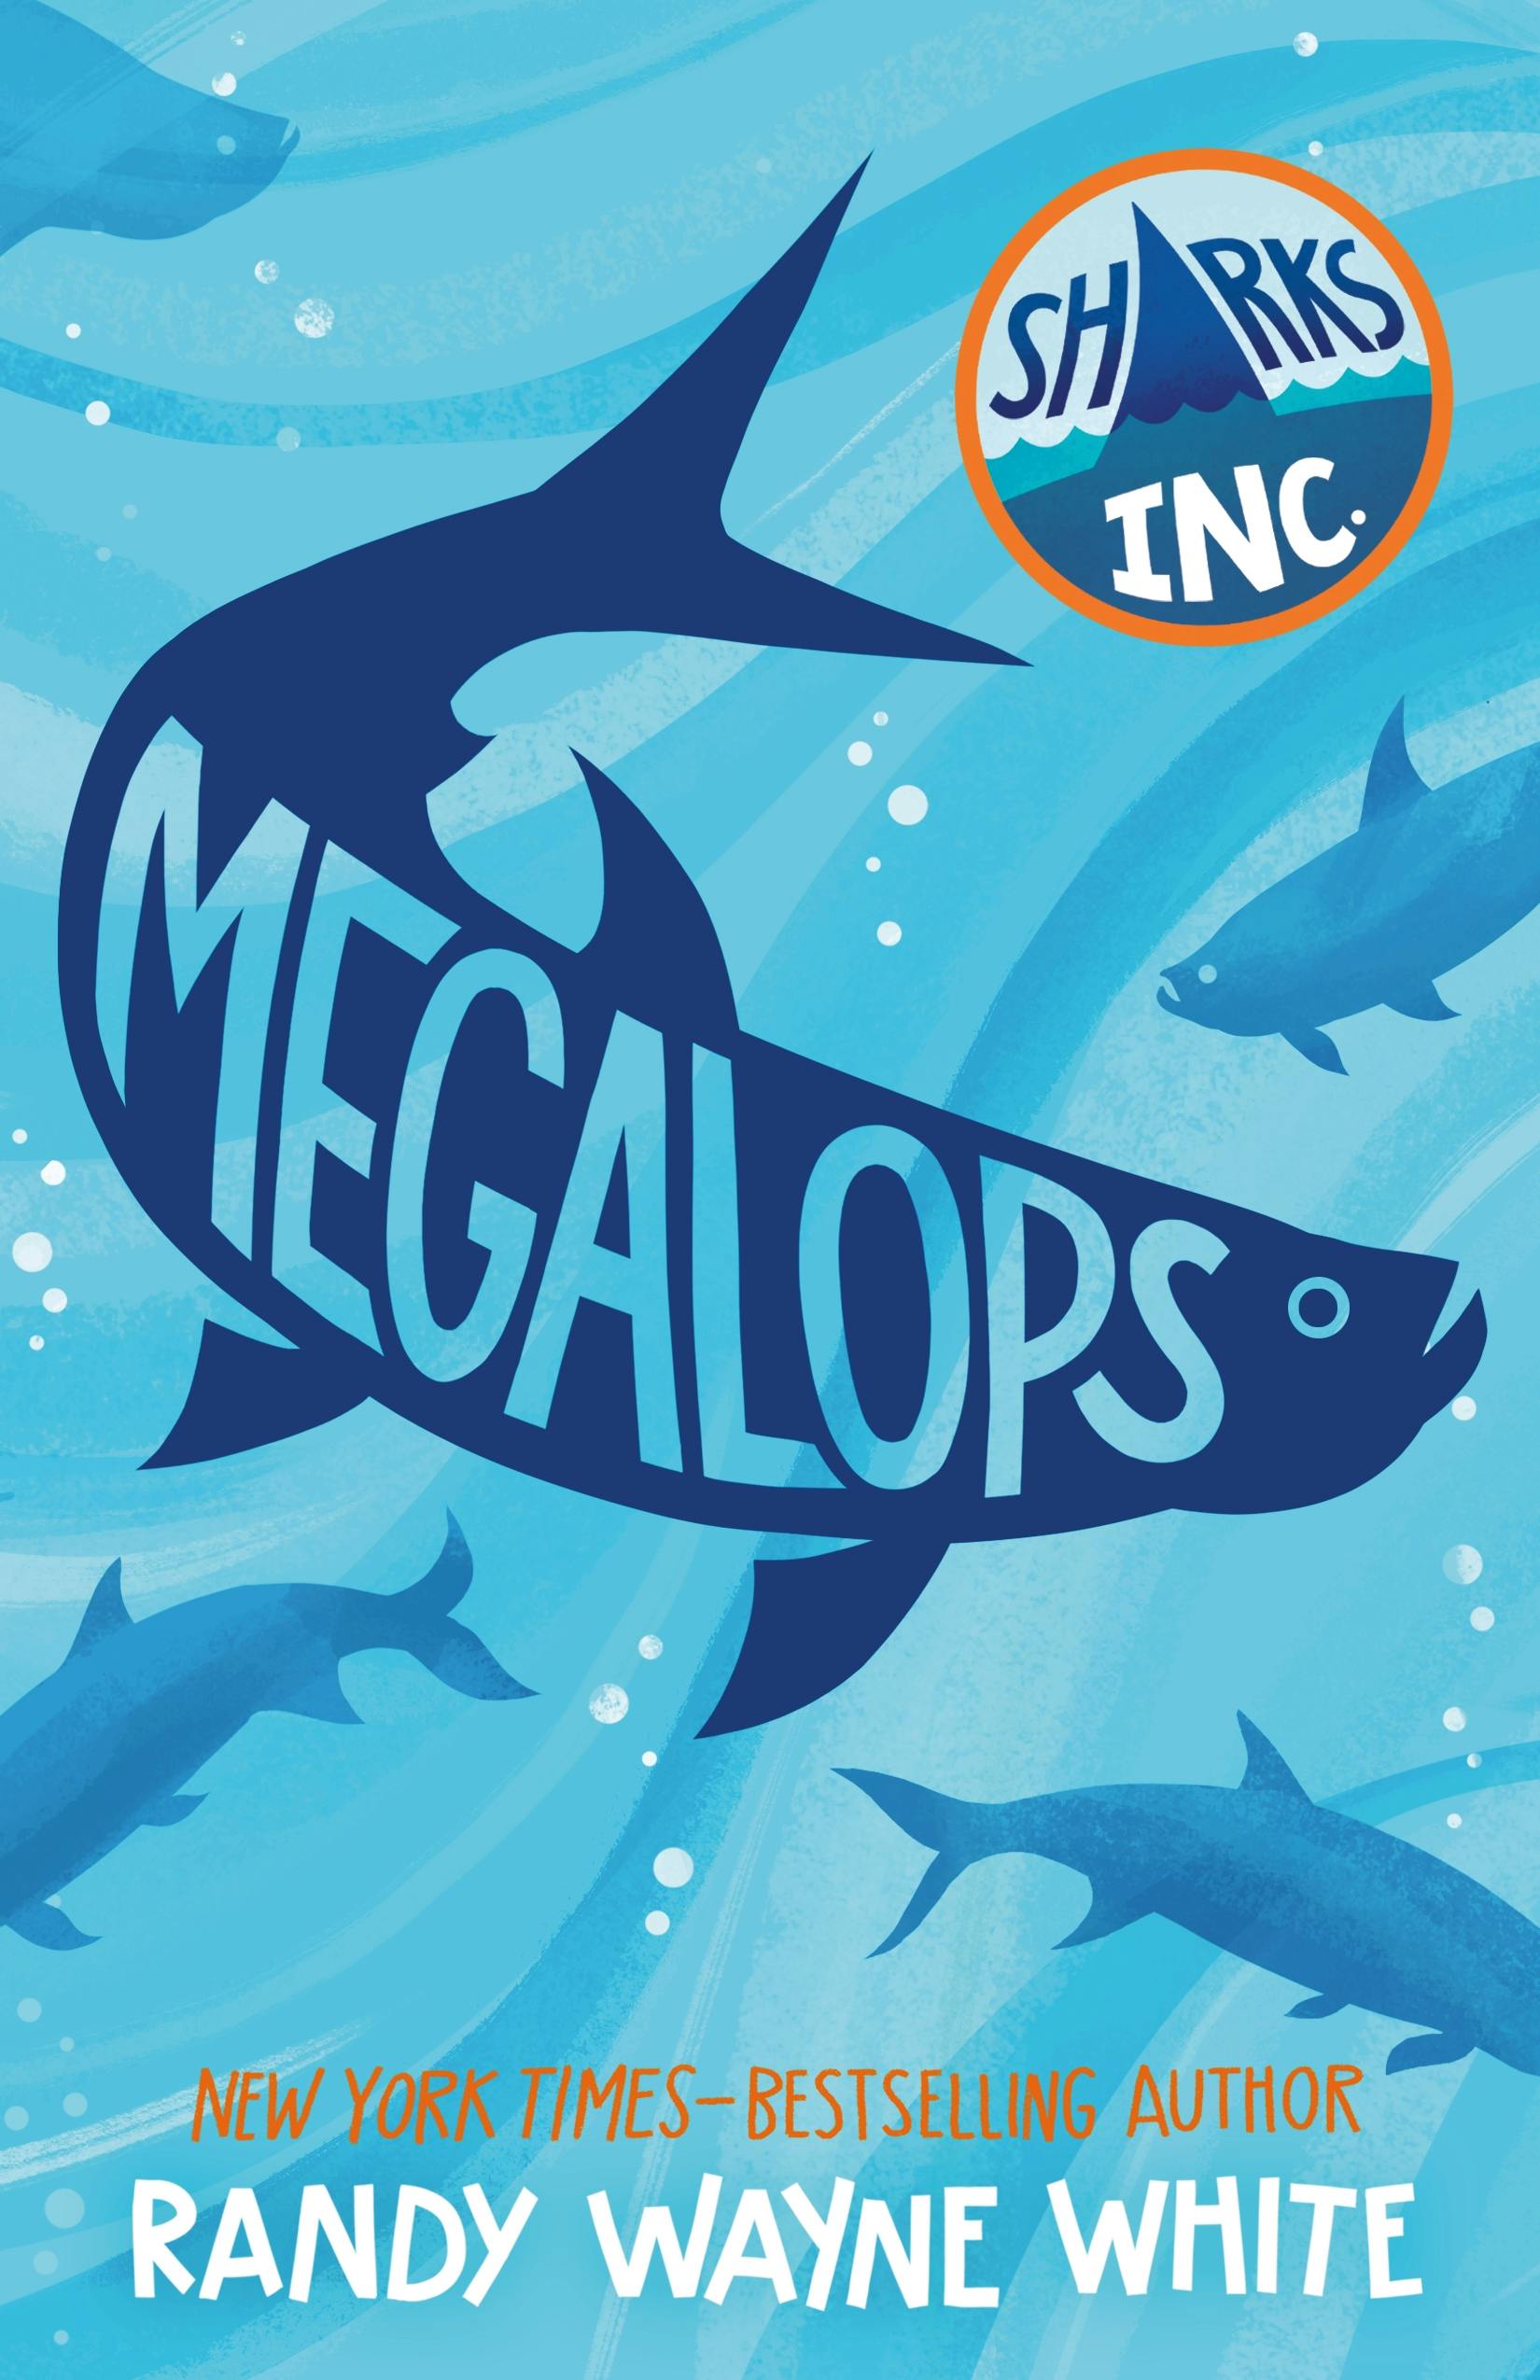 Long Sleeve Tournament Tee. B.I.G.S. — Block Island Giant Shark Tournament